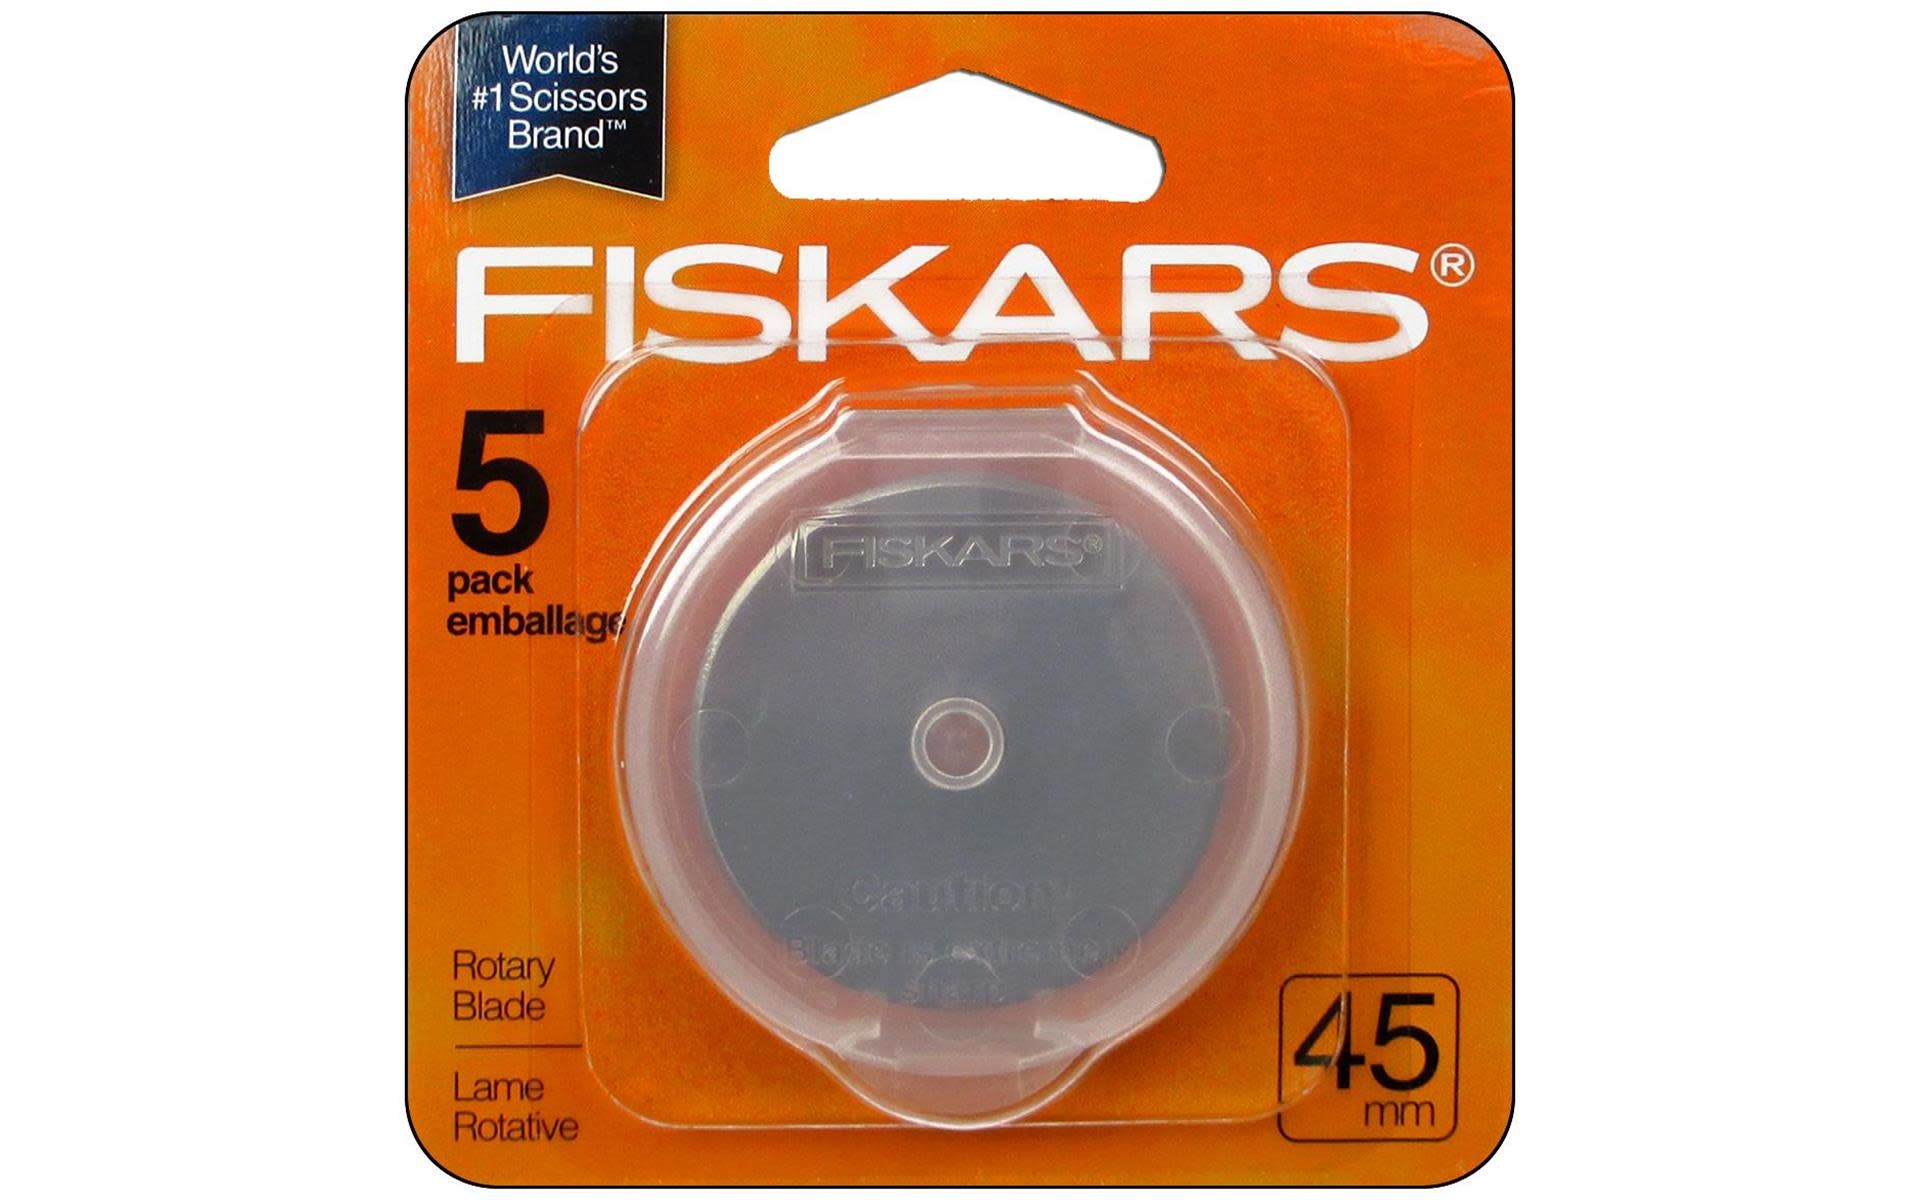 Fiskars Fiskars Rotary Cutter - RISD Store